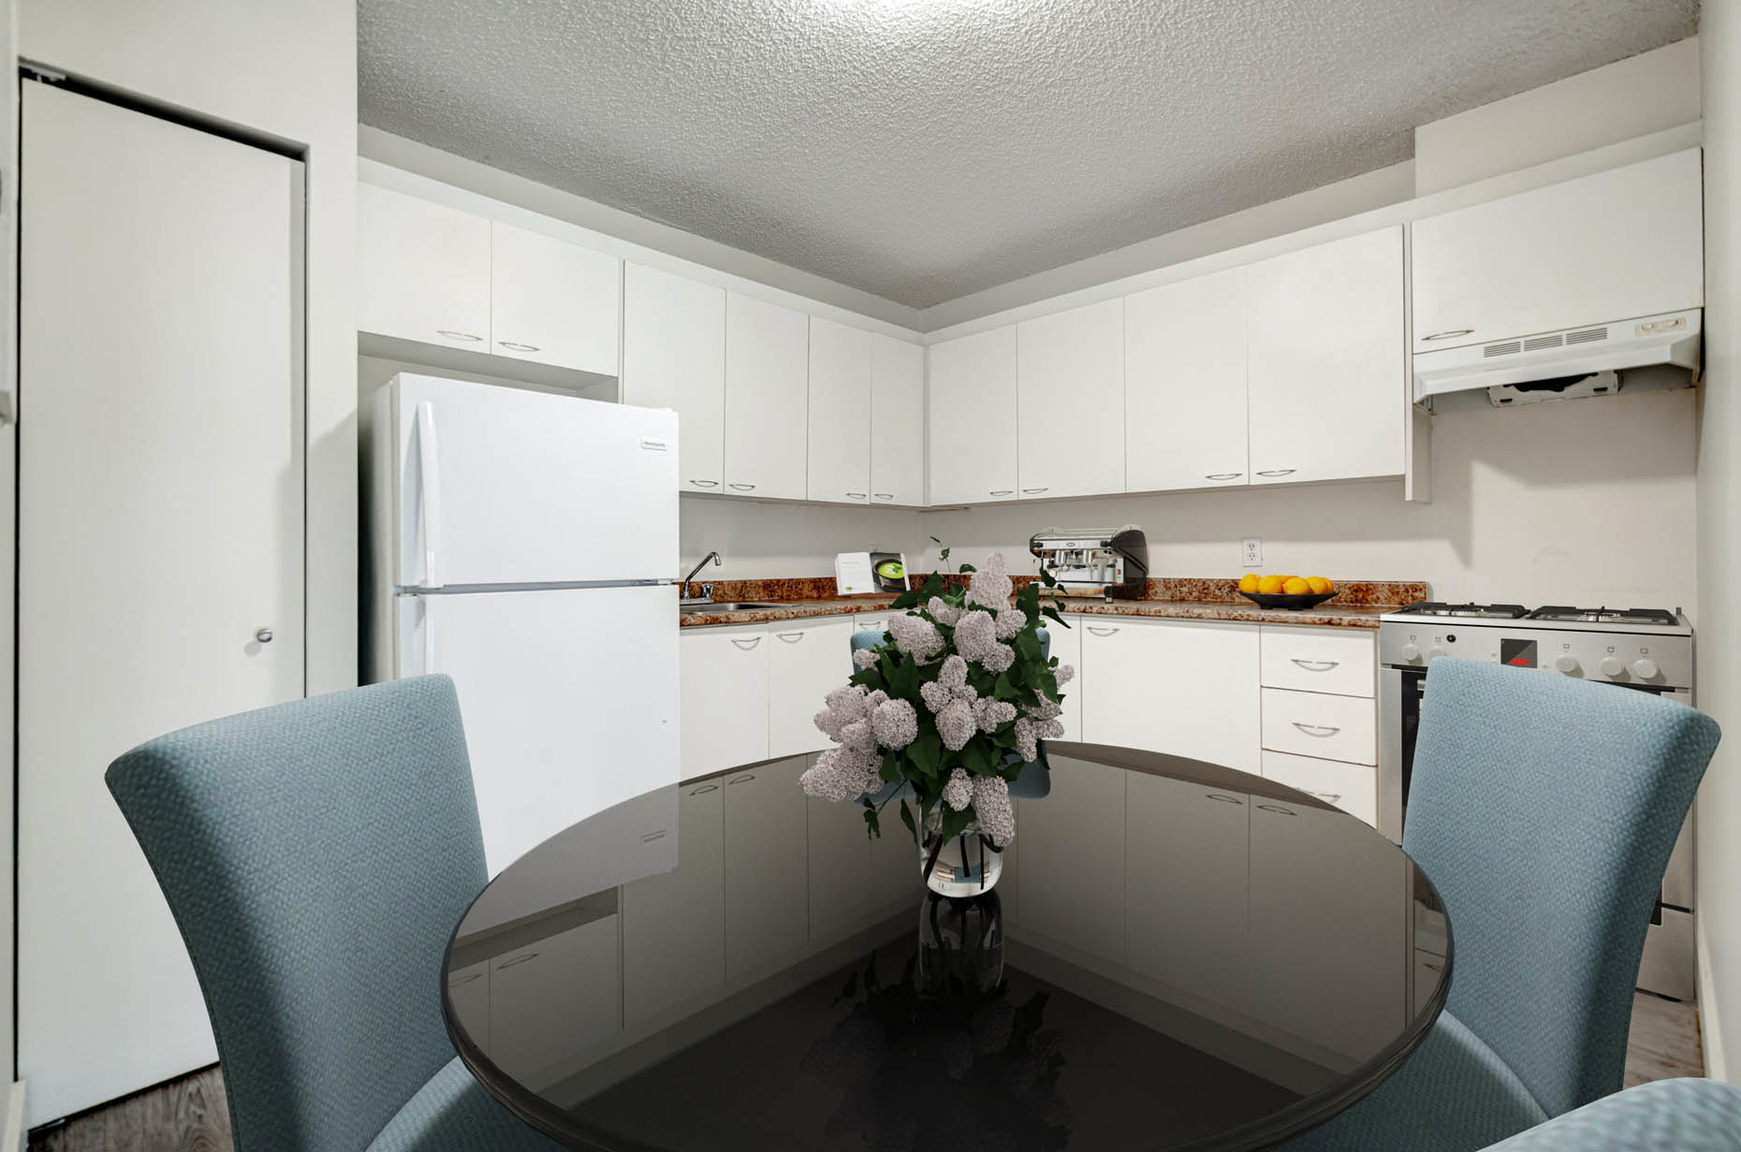 1 bedroom Apartments for rent in Ville St-Laurent - Bois-Franc at Complexe Deguire - Photo 06 - RentersPages – L407181